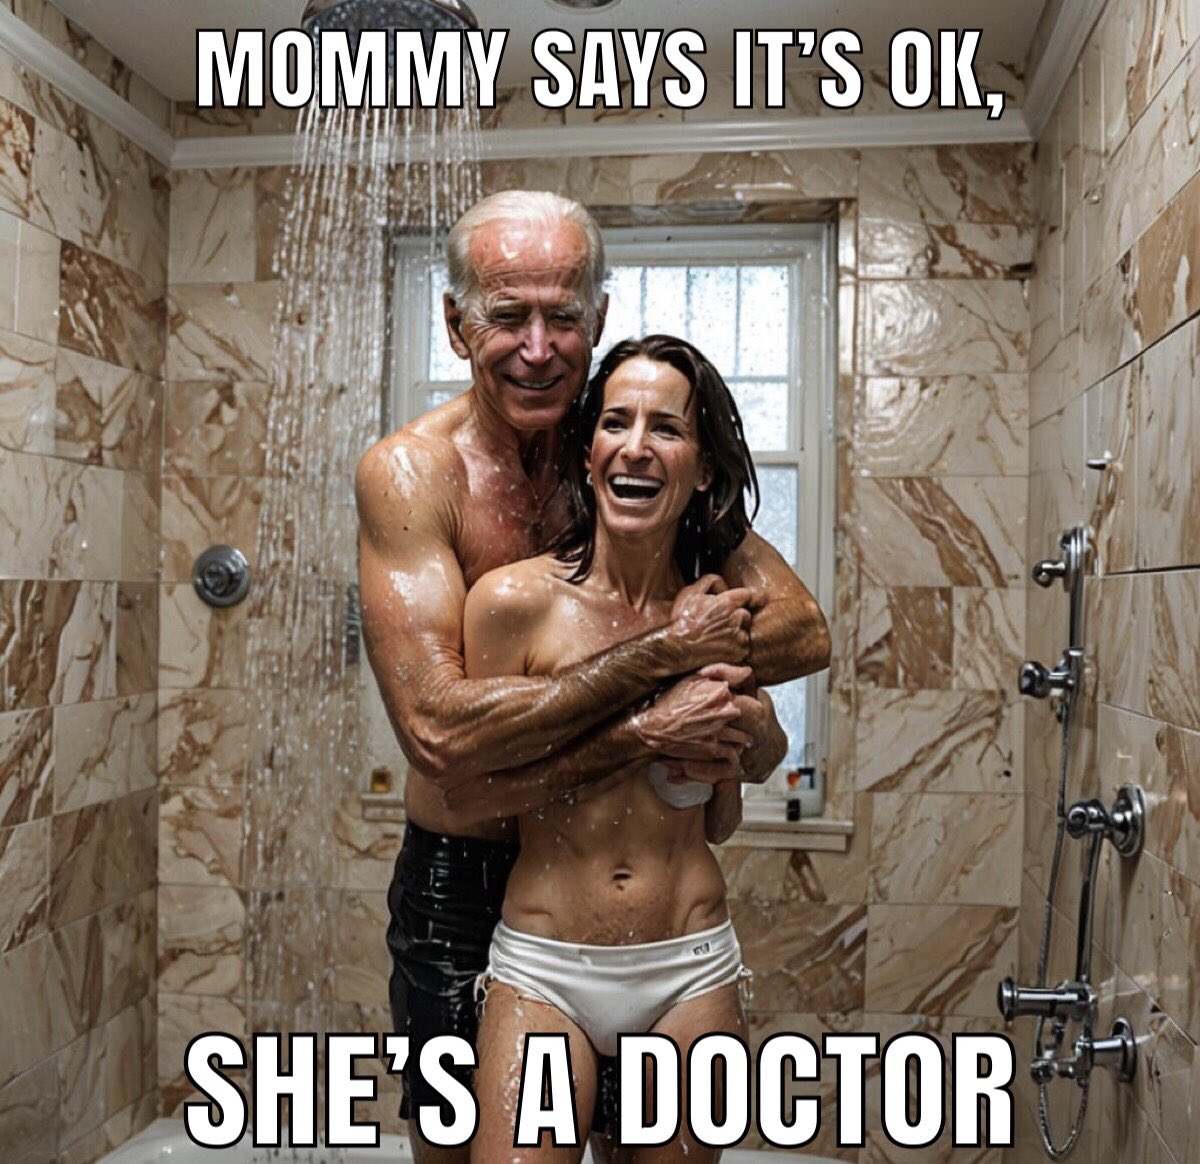 Mommy says it’s OK…she’s a doctor. #JoeBiden #JillBiden #AshleyBiden